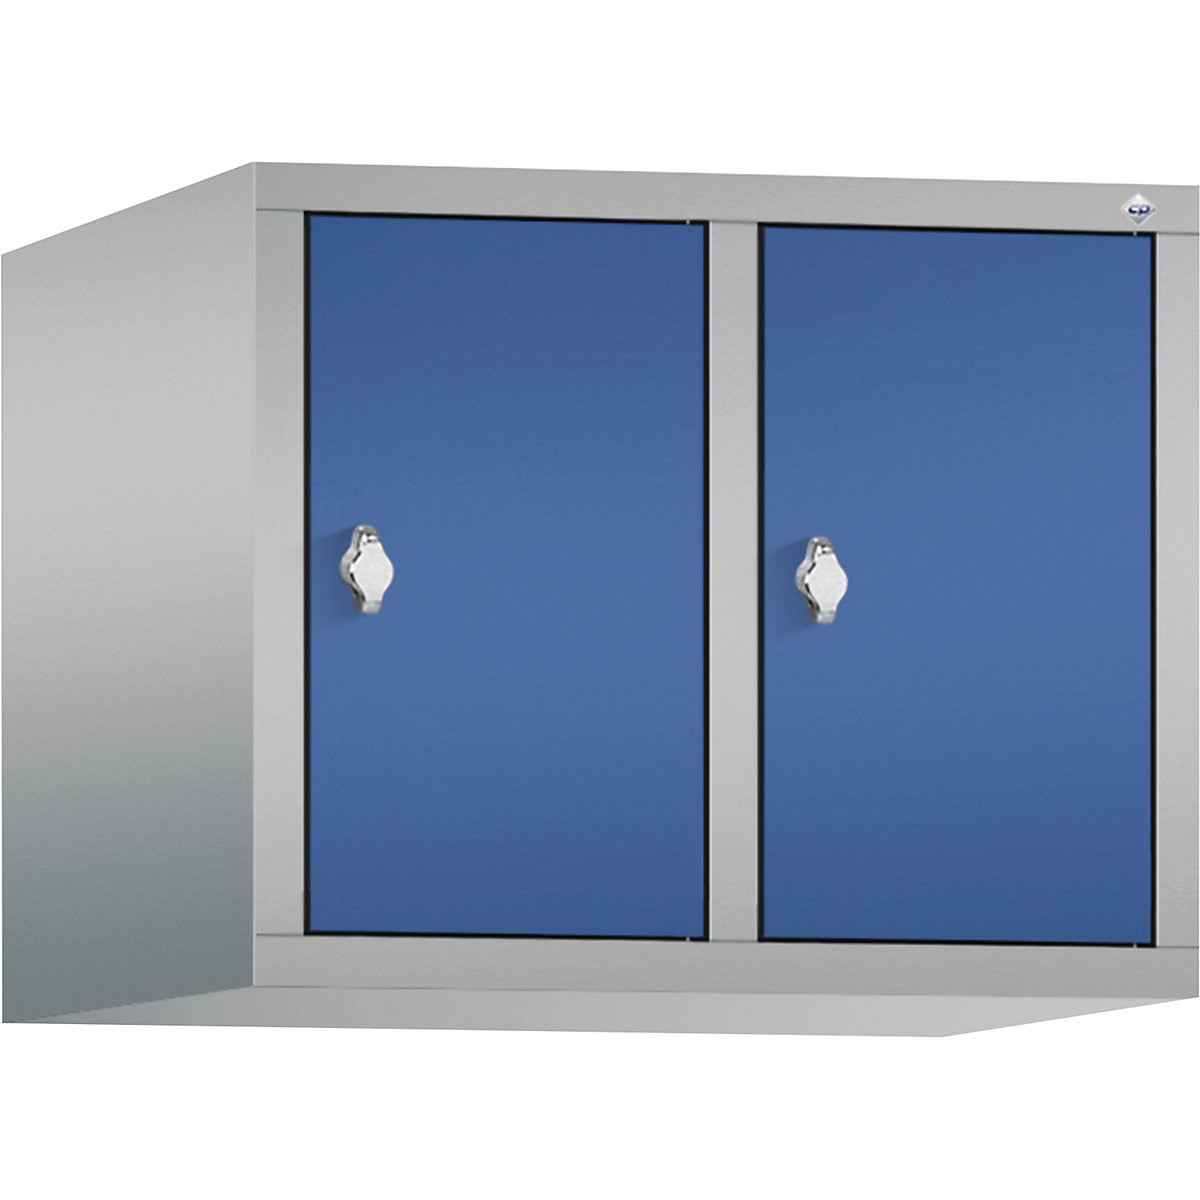 C+P – Altillo CLASSIC, 2 compartimentos, anchura de compartimento 300 mm, aluminio blanco / azul genciana